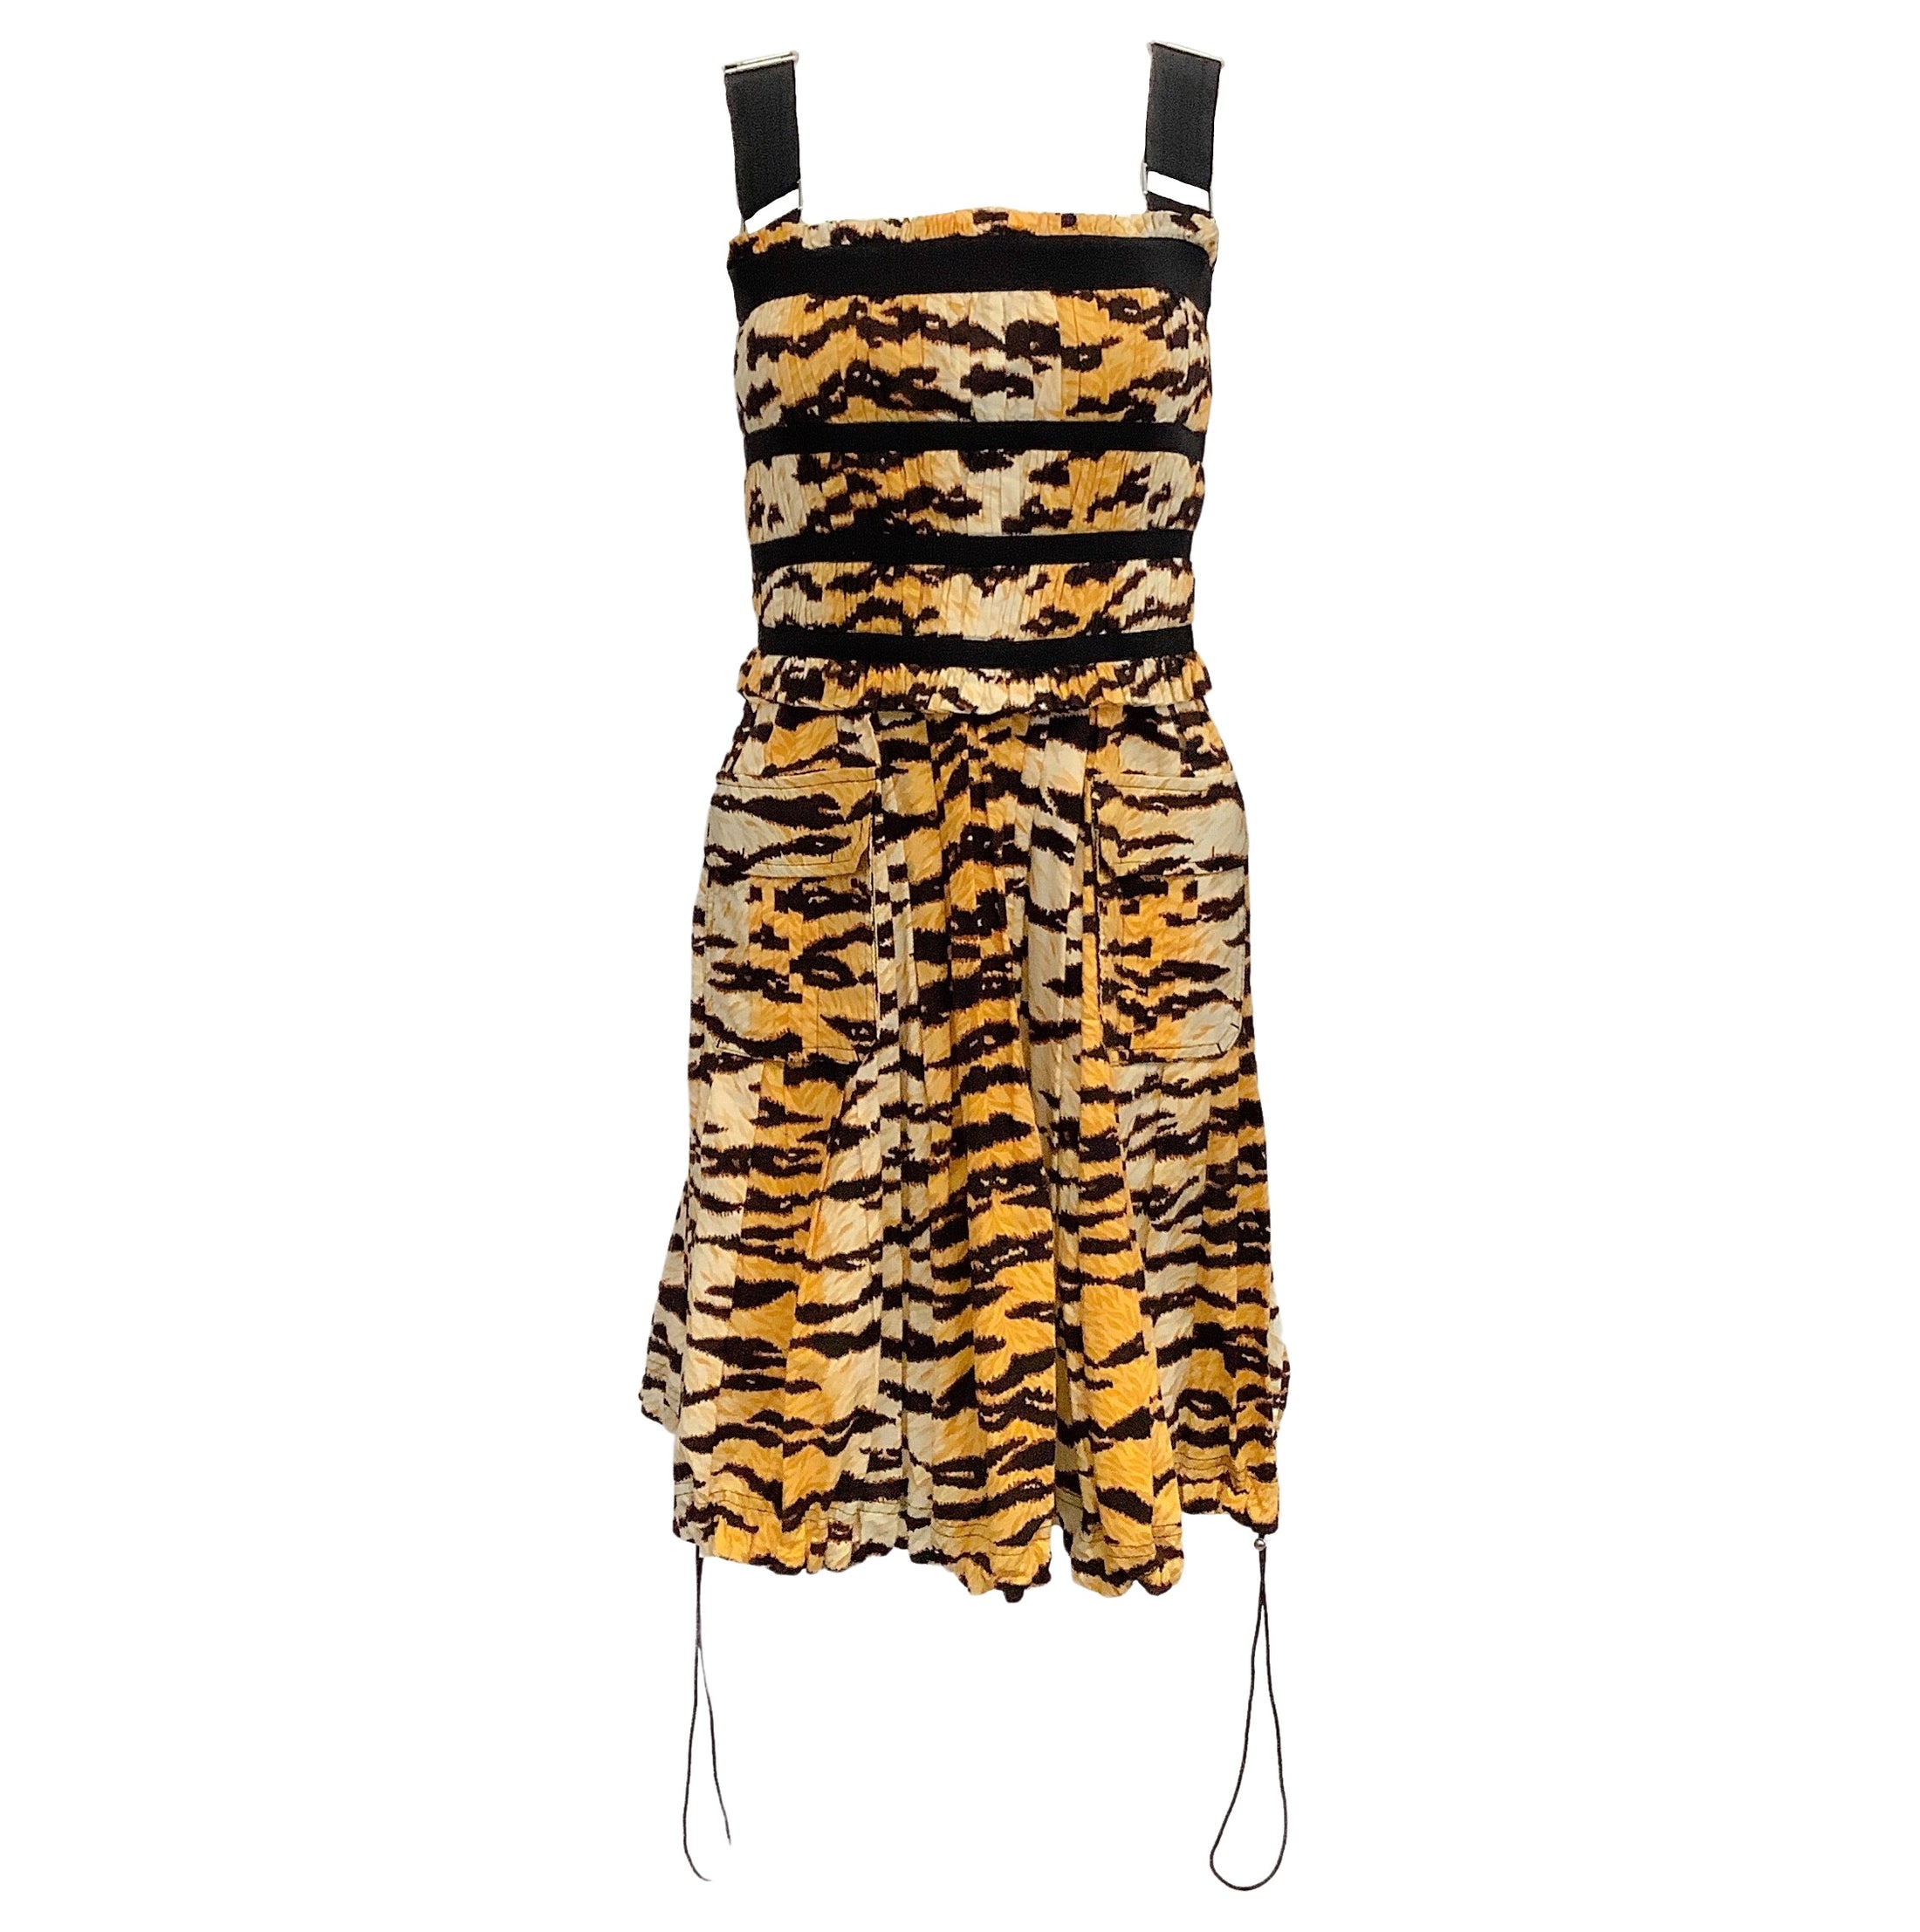 Dolce & Gabbana Gold / Black Animal Print Sleeveless Dress with Drawstring Hem